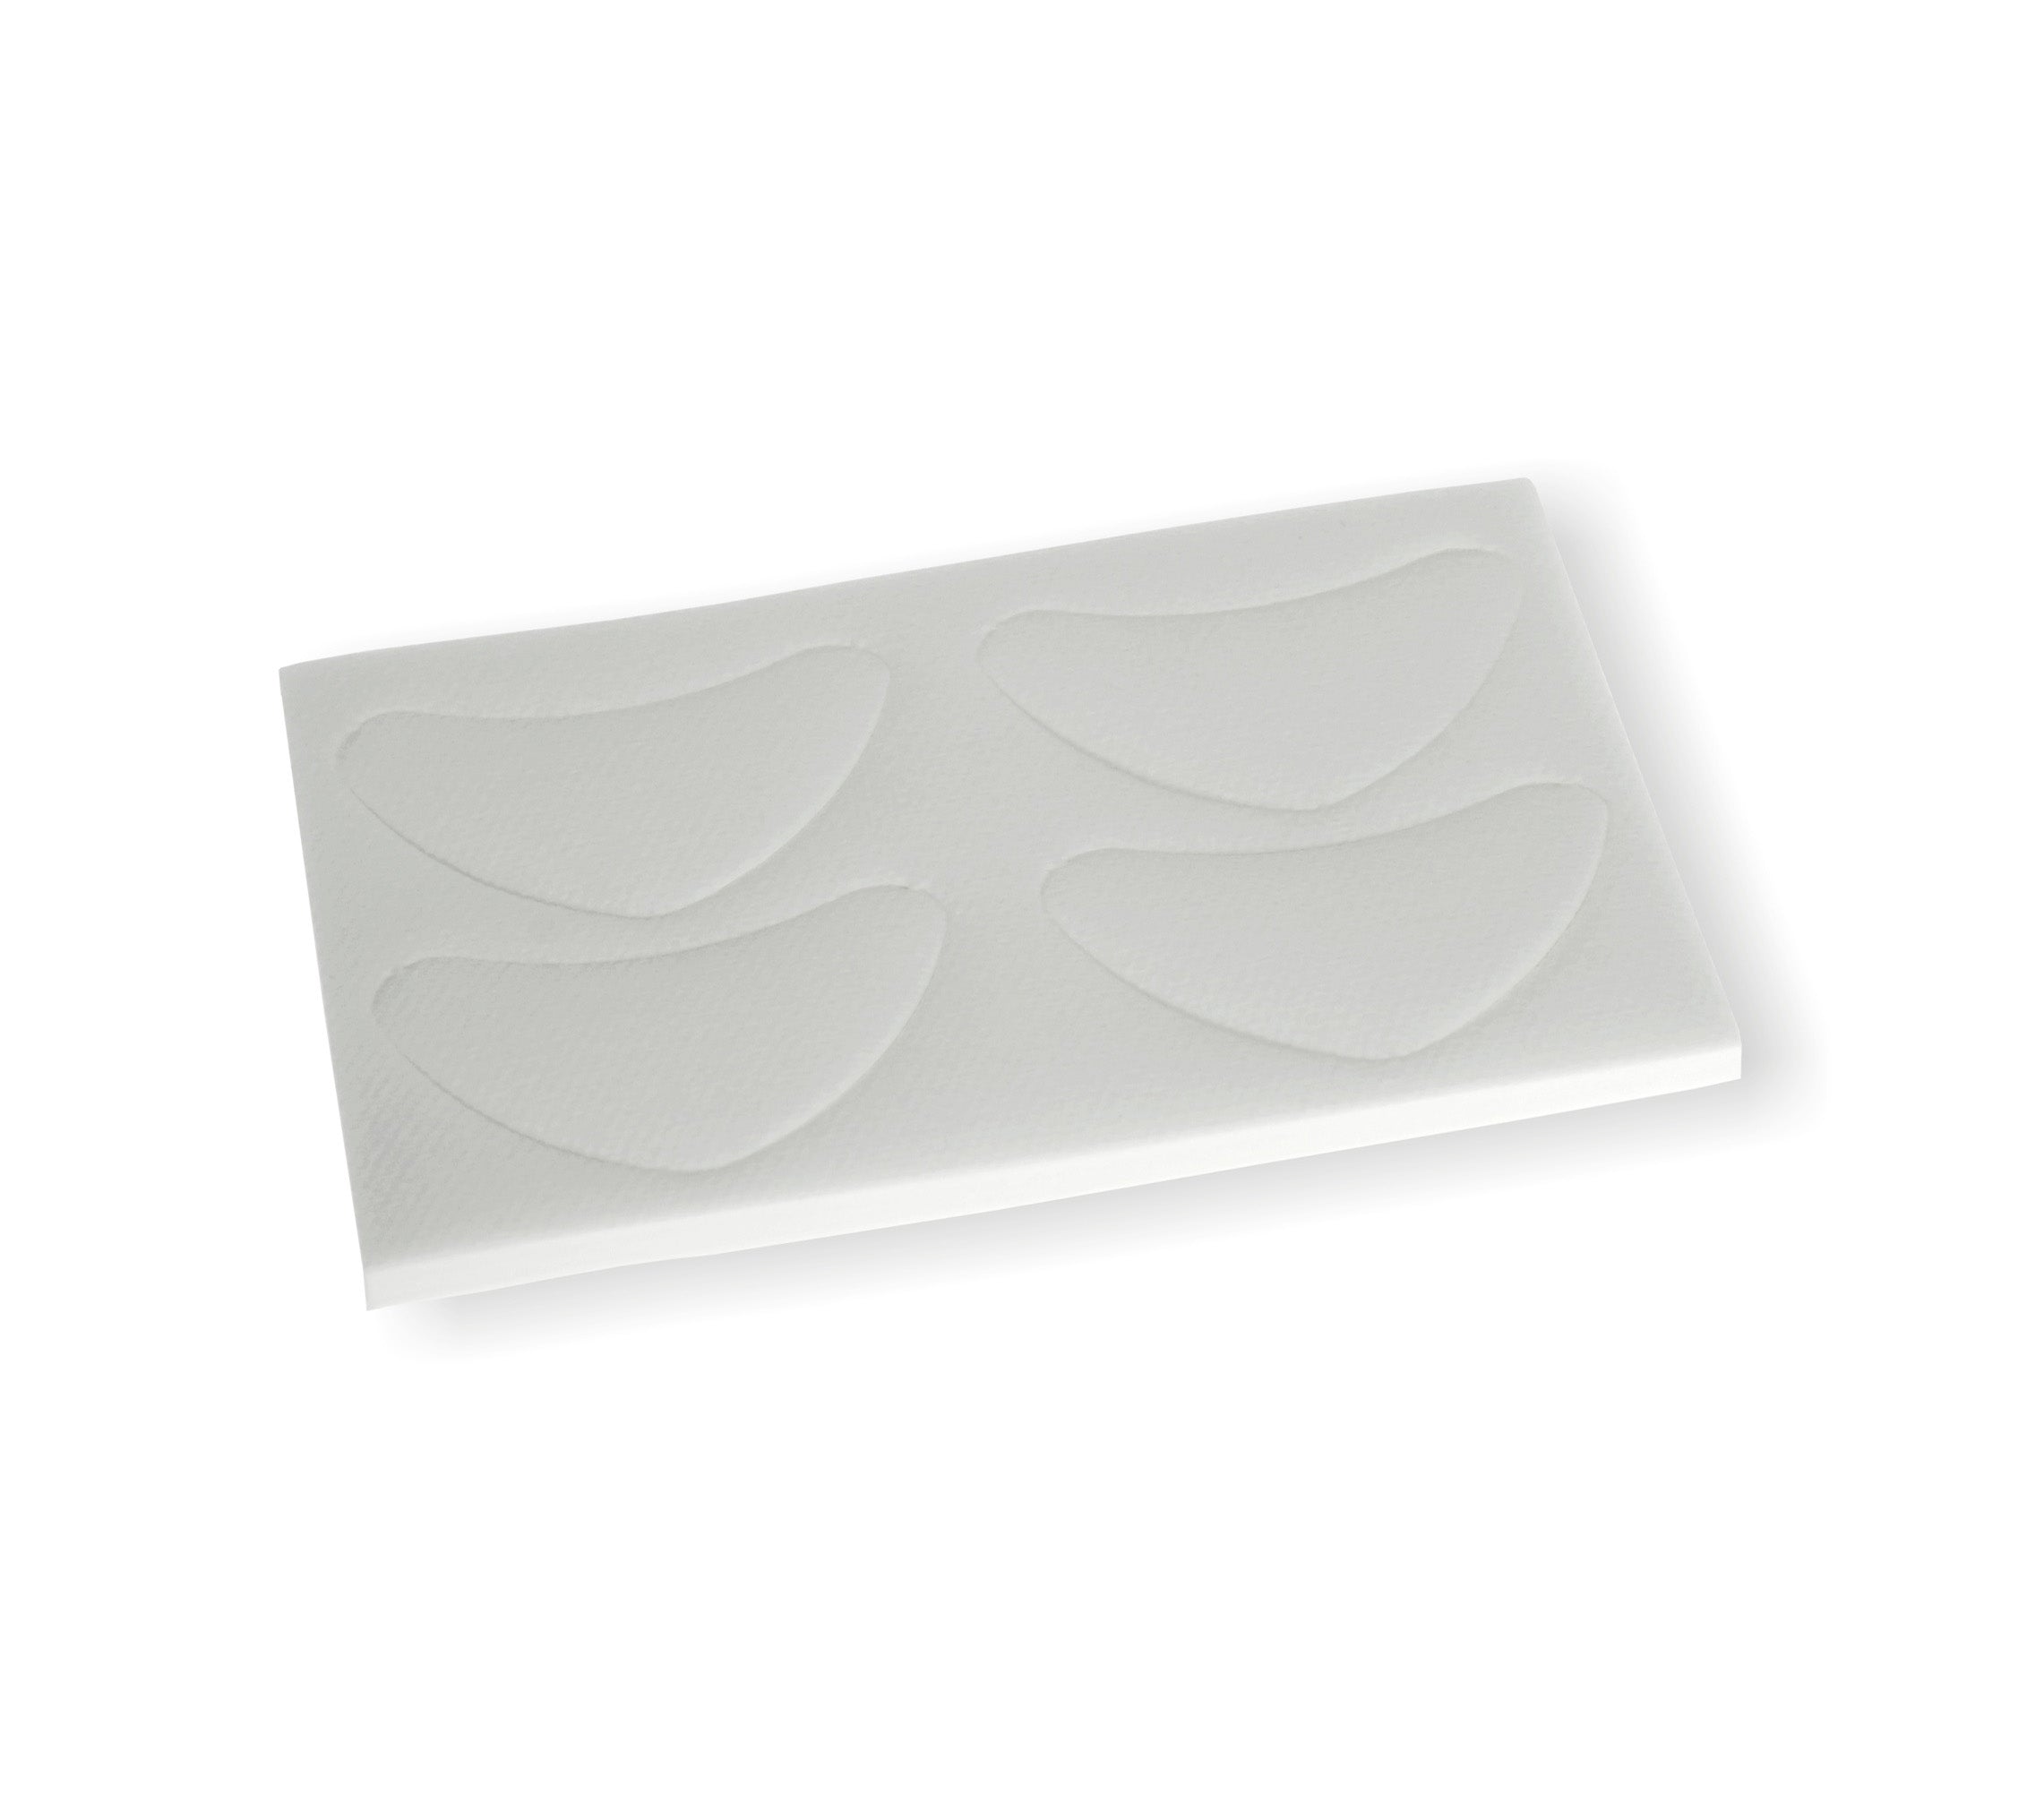 Skin Protection Pad - Lash Tinting Pads - 100 pieces